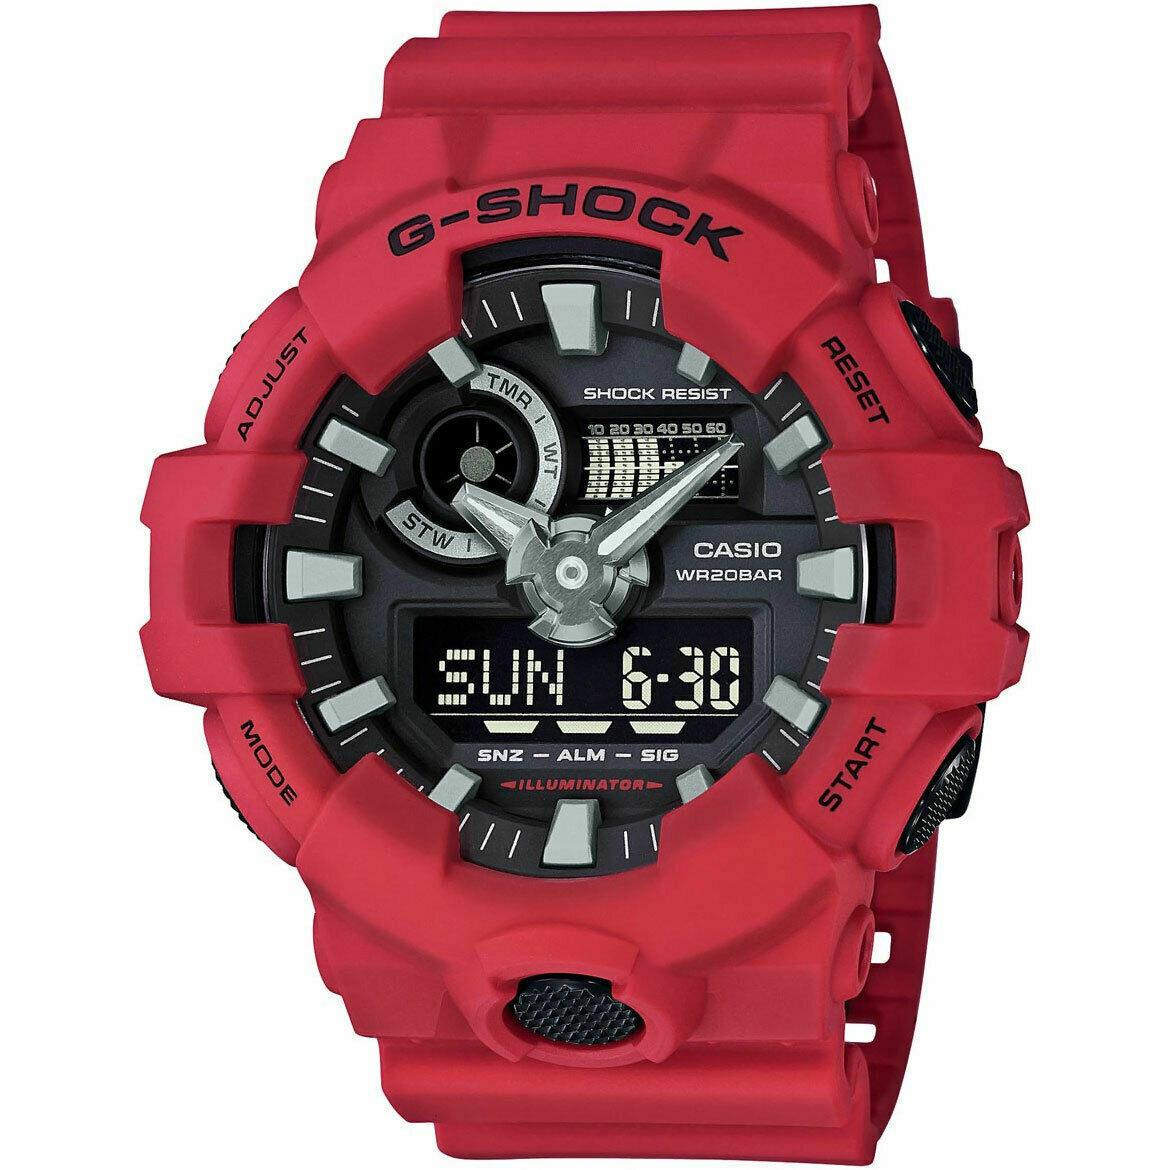 Casio G-shock Mens Analog Digital Resin Red/black Watch GA700-4A